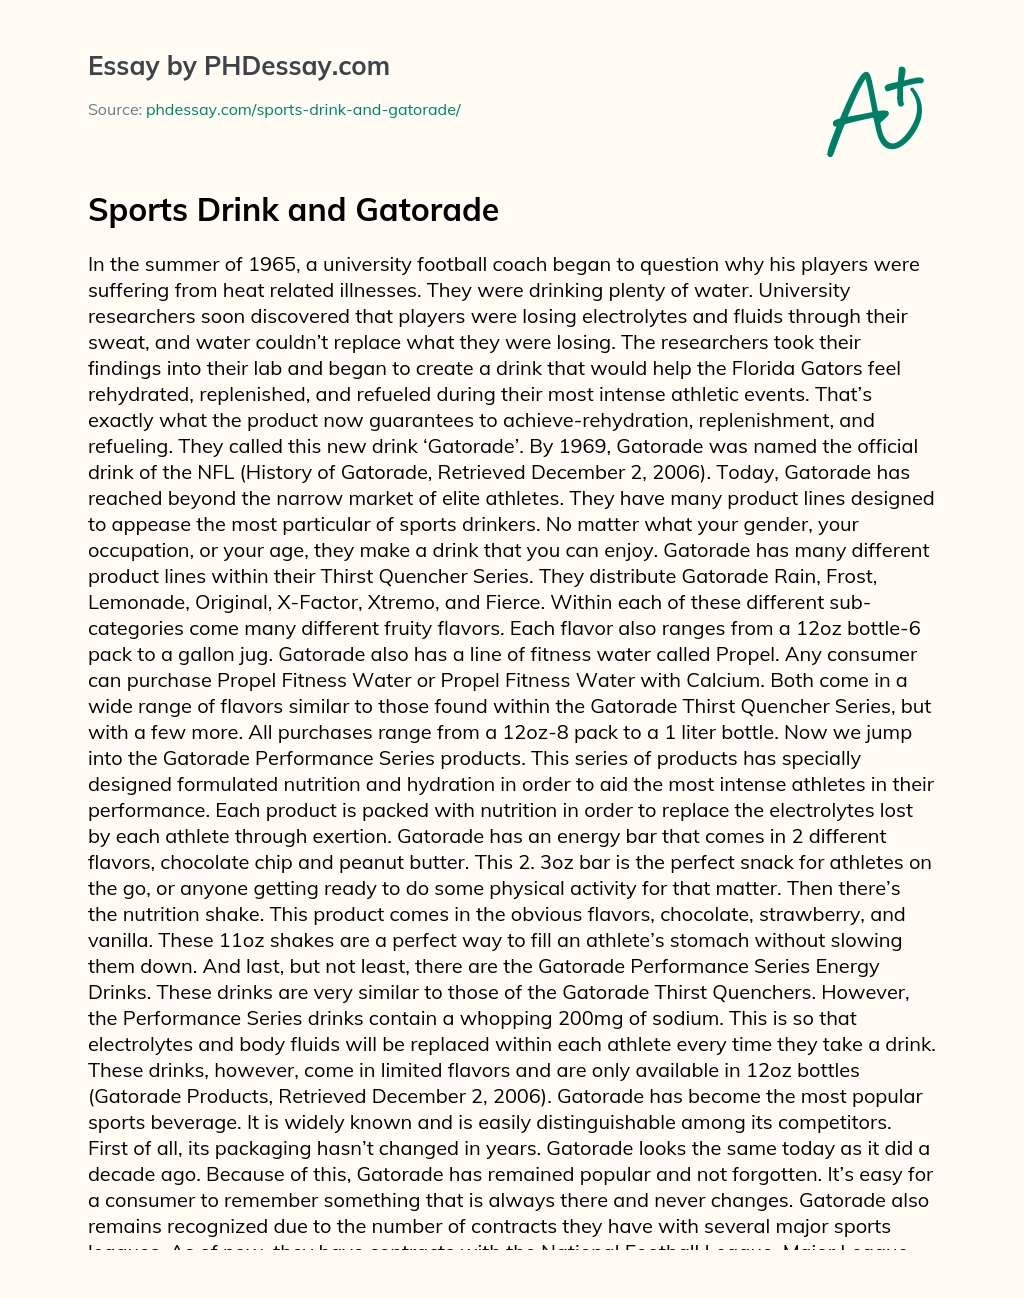 Sports Drink and Gatorade essay